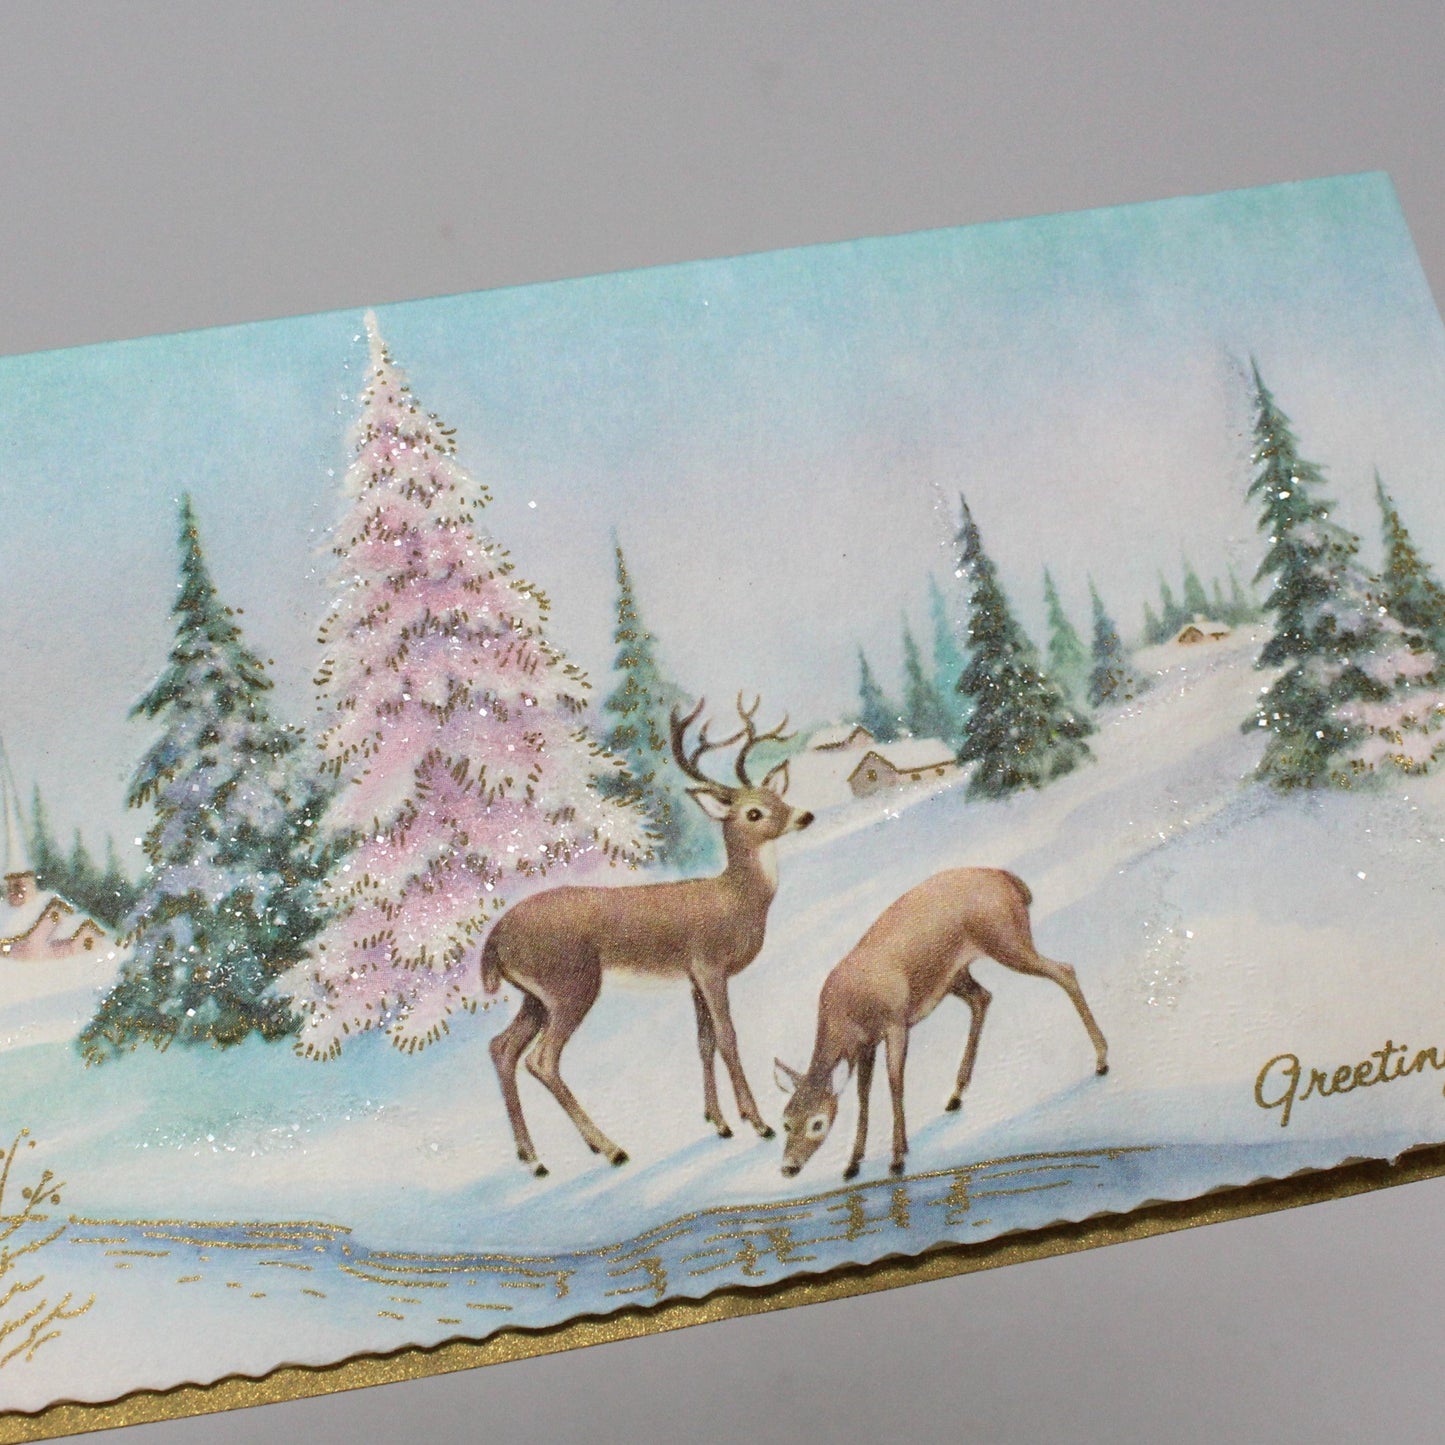 Greeting Card / Christmas Card, Vintage Two Reindeer by Pink Christmas Tree, w/Envelope